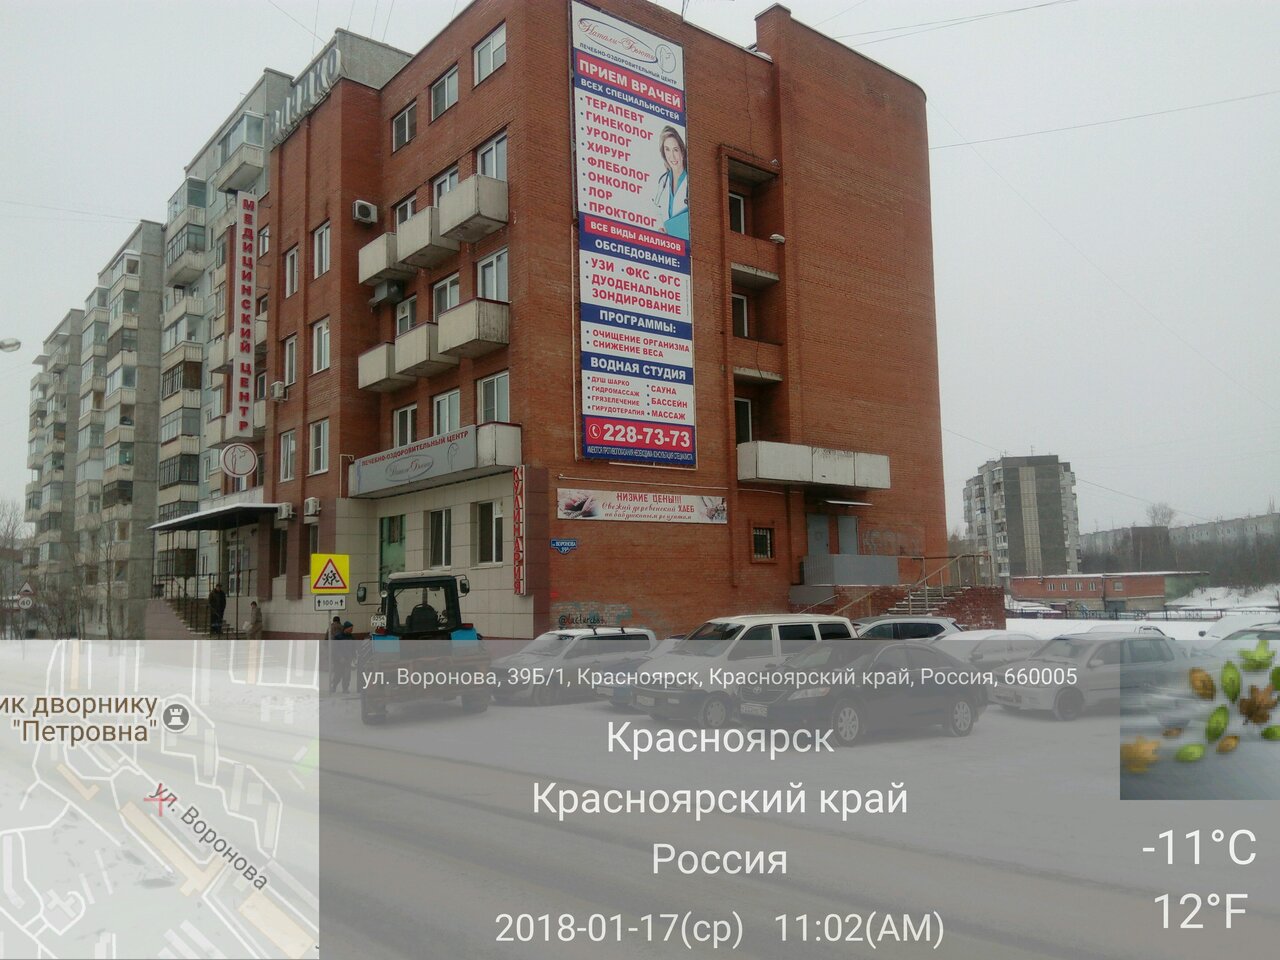 Красноярск клиника бьюти